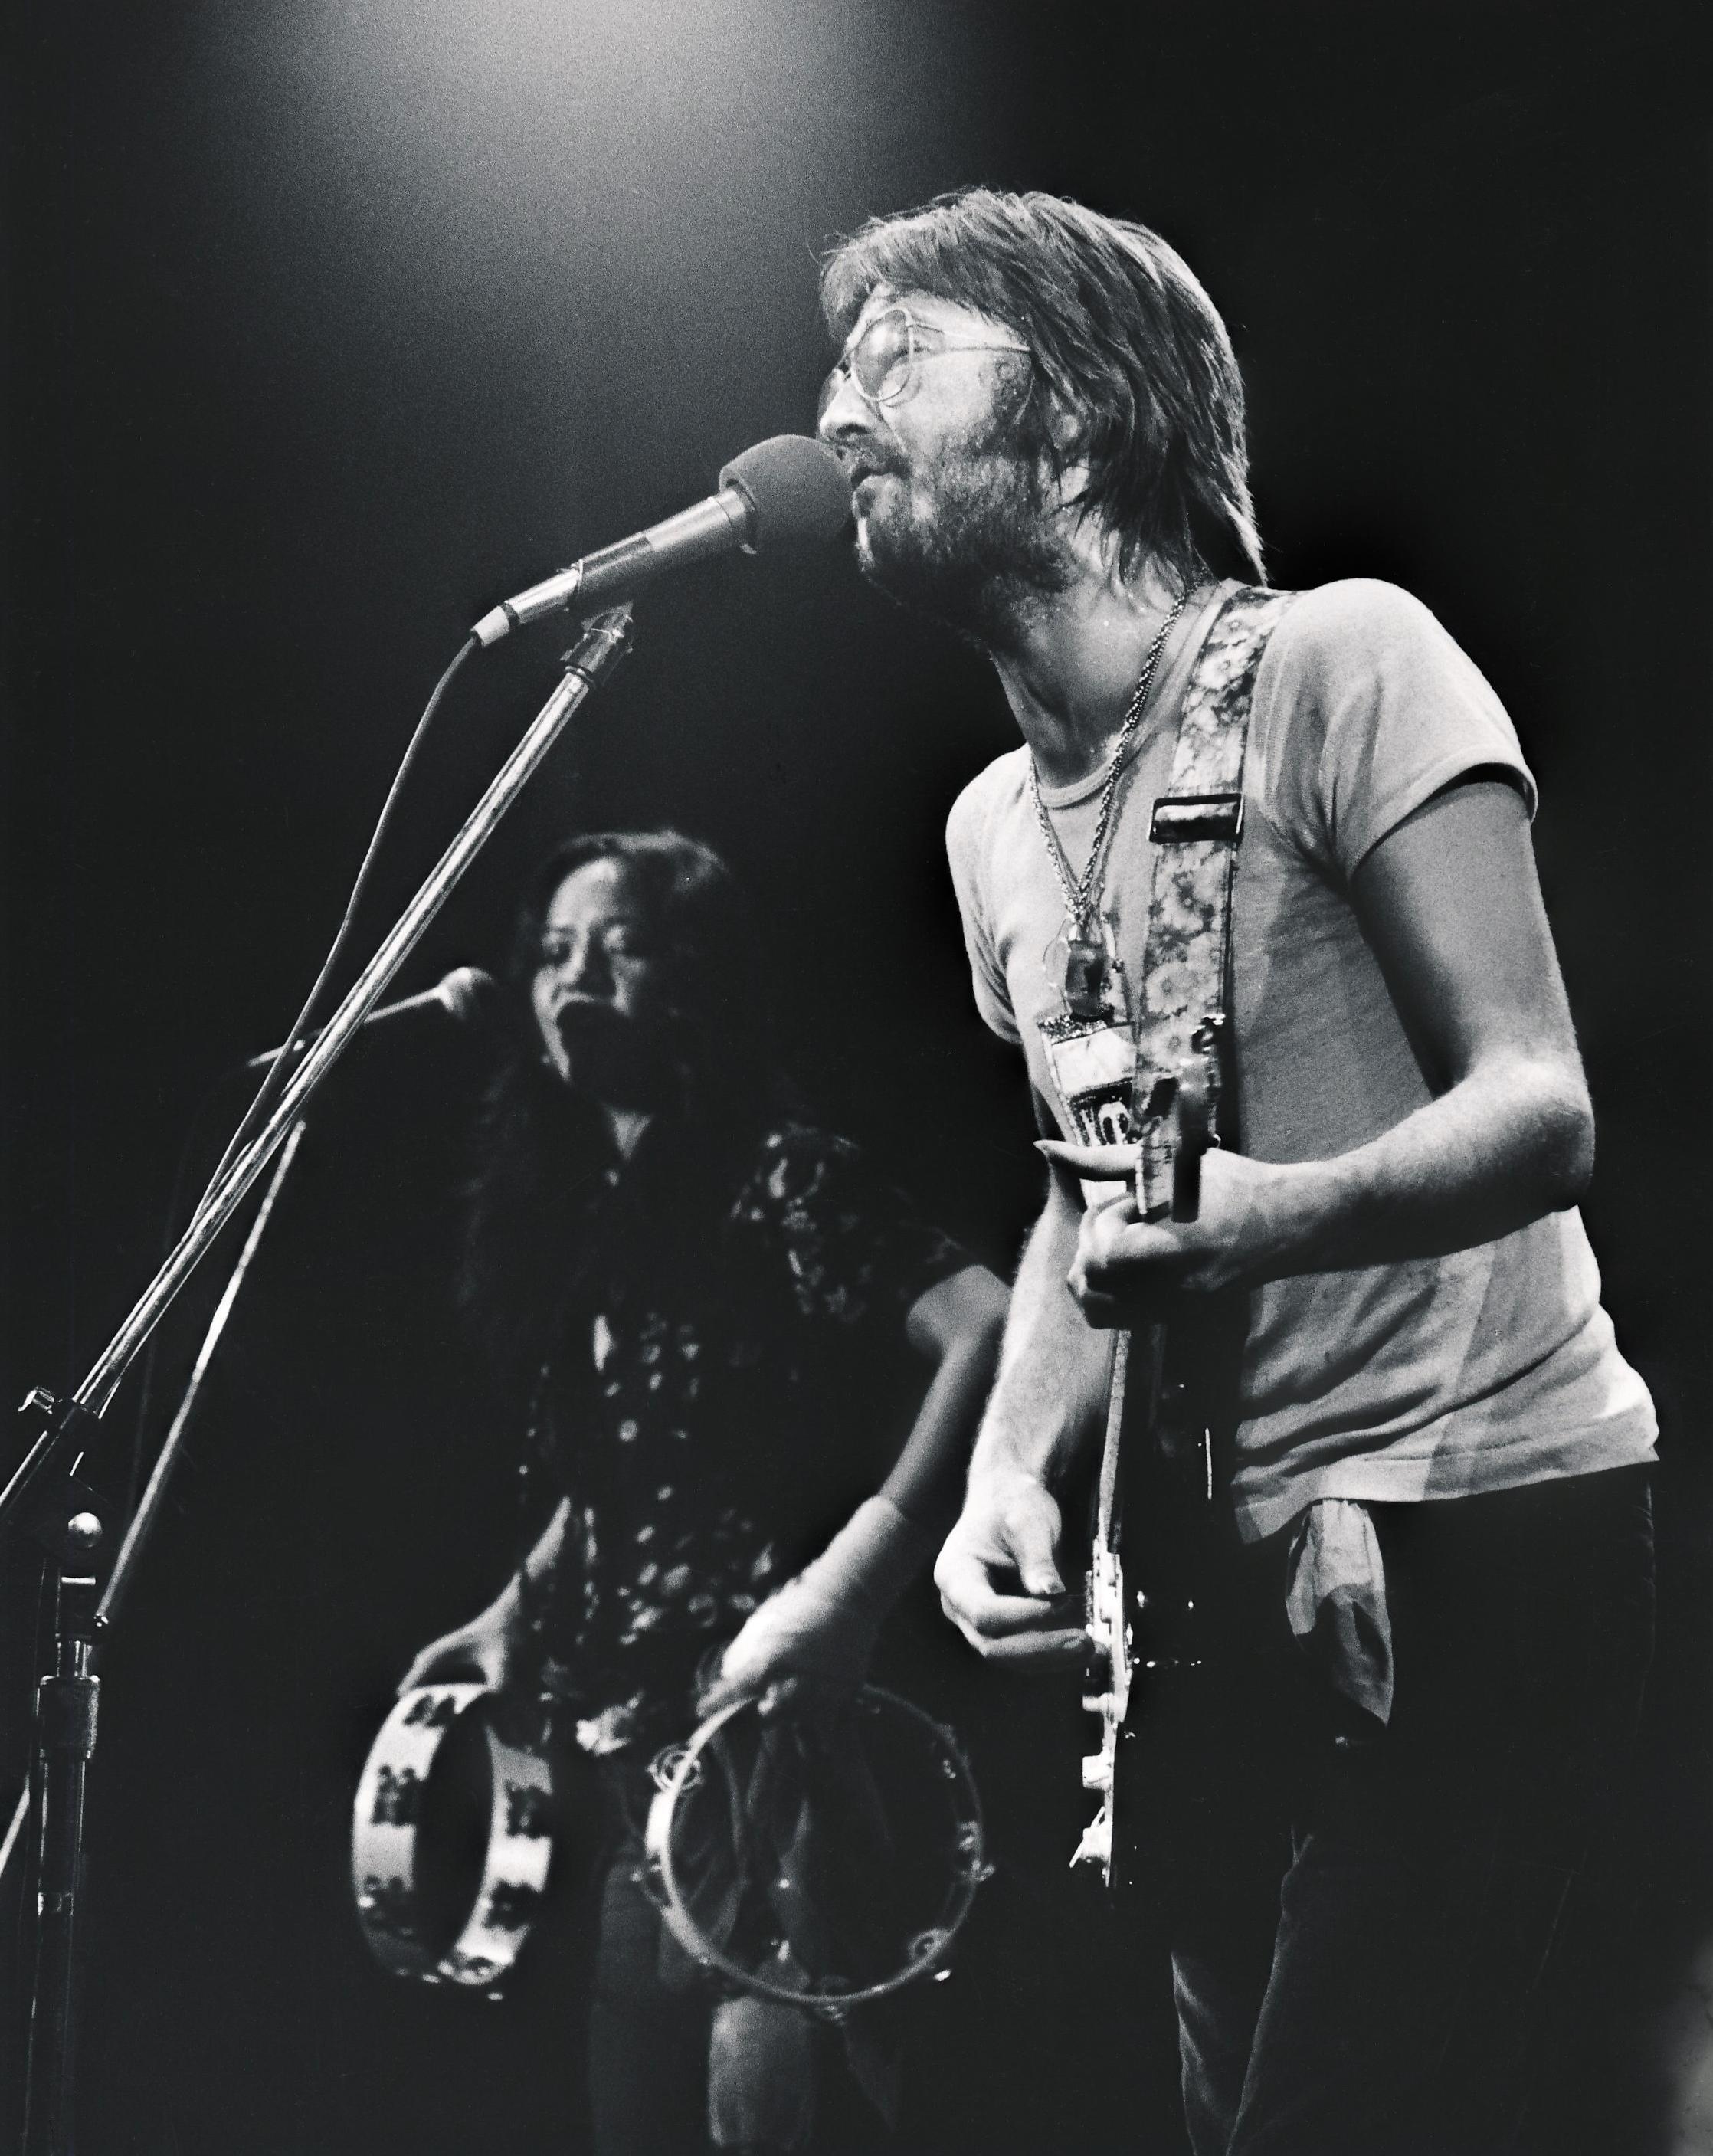 Tony DeNono Portrait Photograph - Eric Clapton Playing Guitar on Stage Fine Art Print